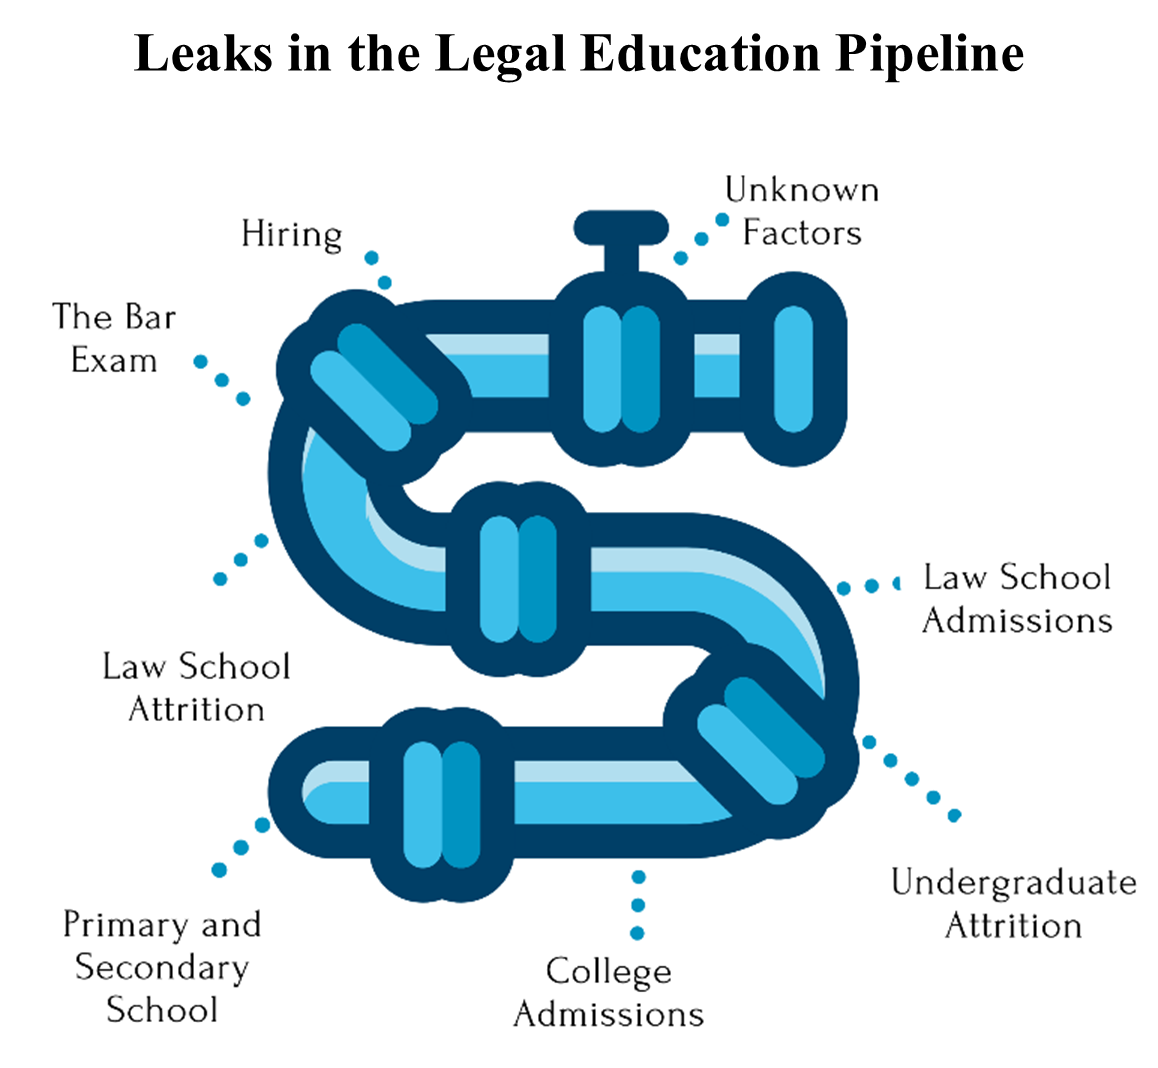 Leaks in the Legal Education Pipeline